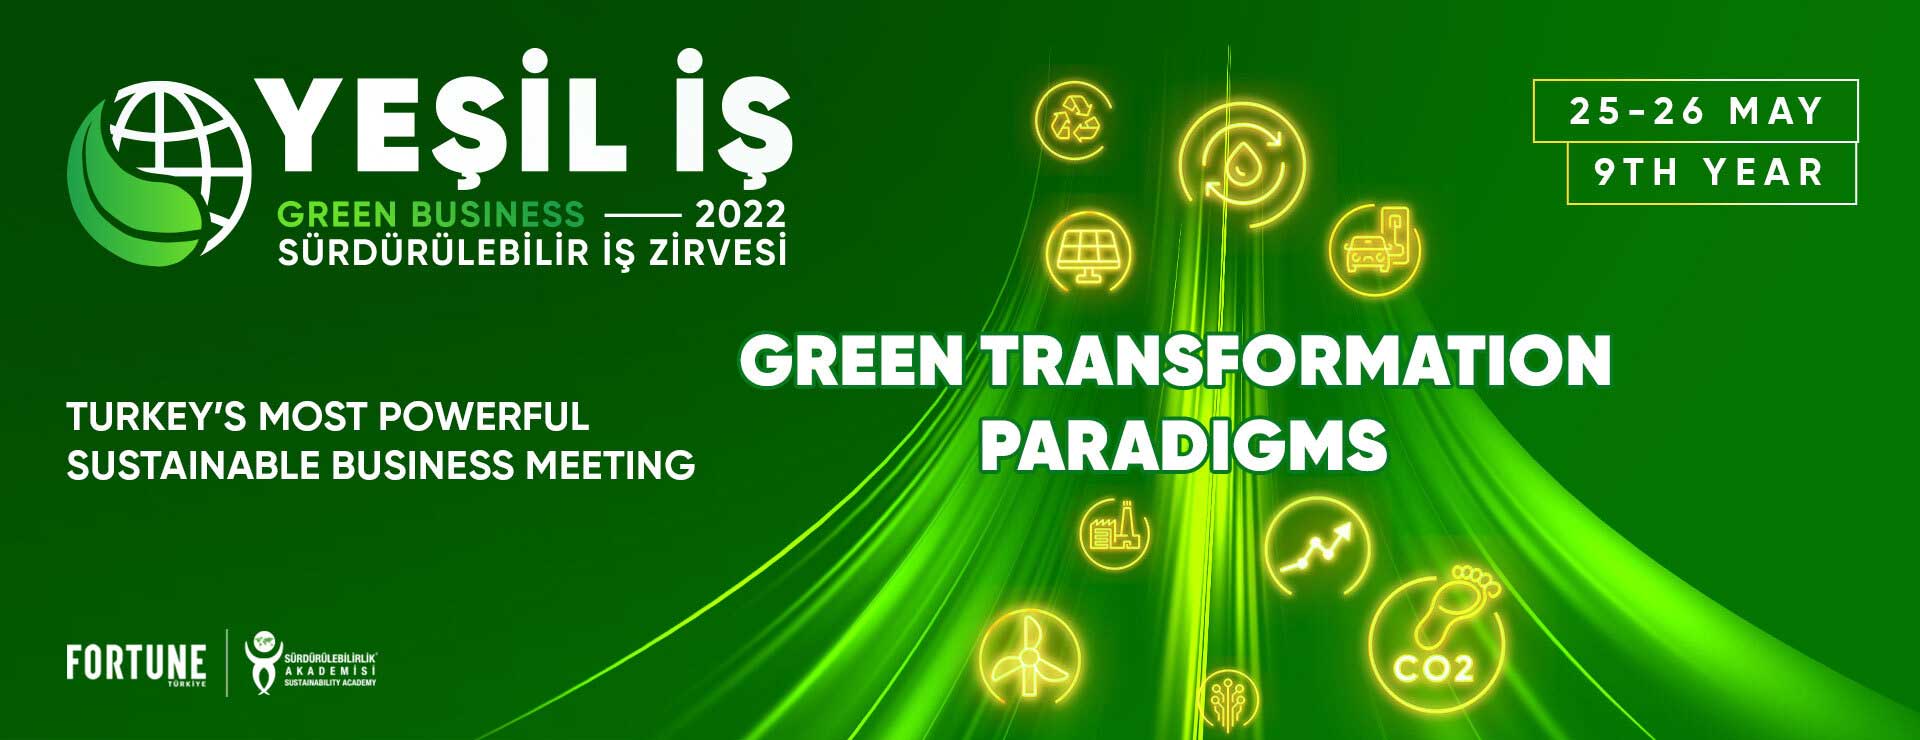 Green Business Summit 2022